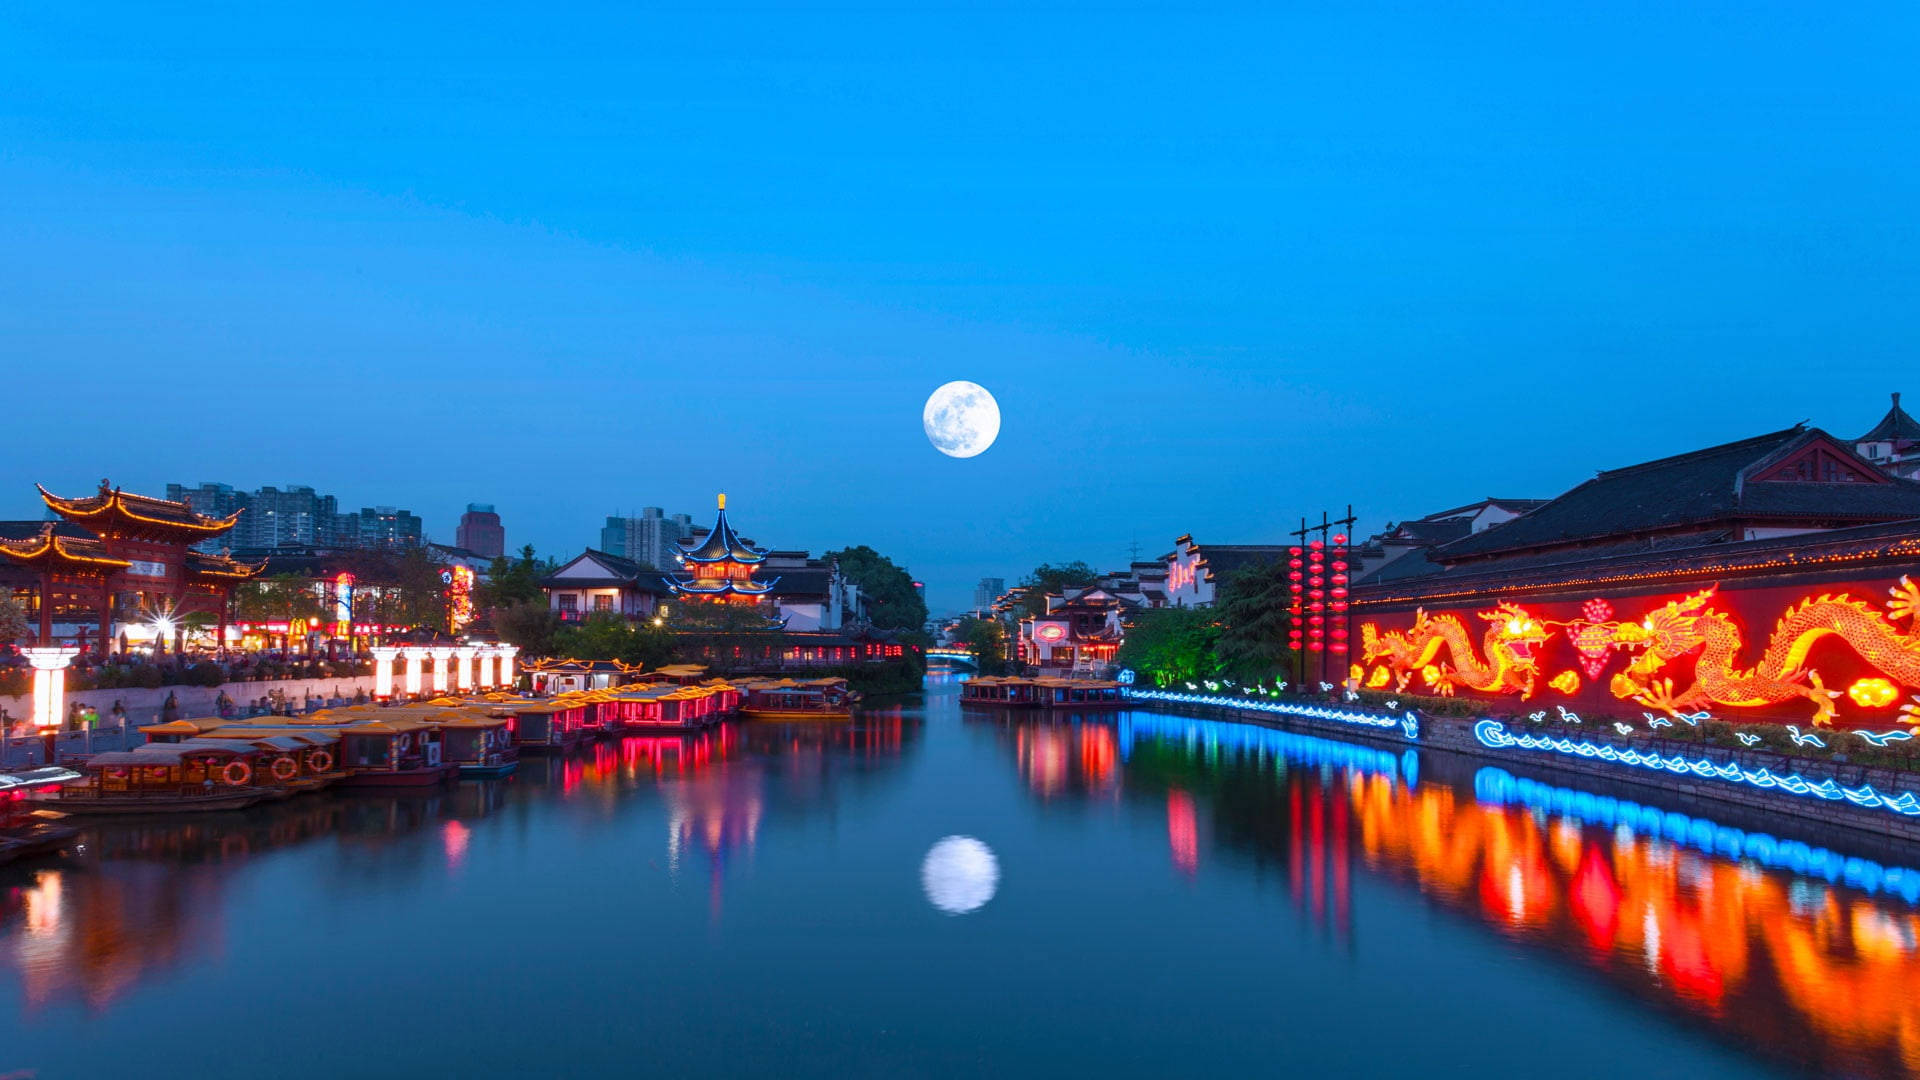 Nanjing Qinhuai River Festival